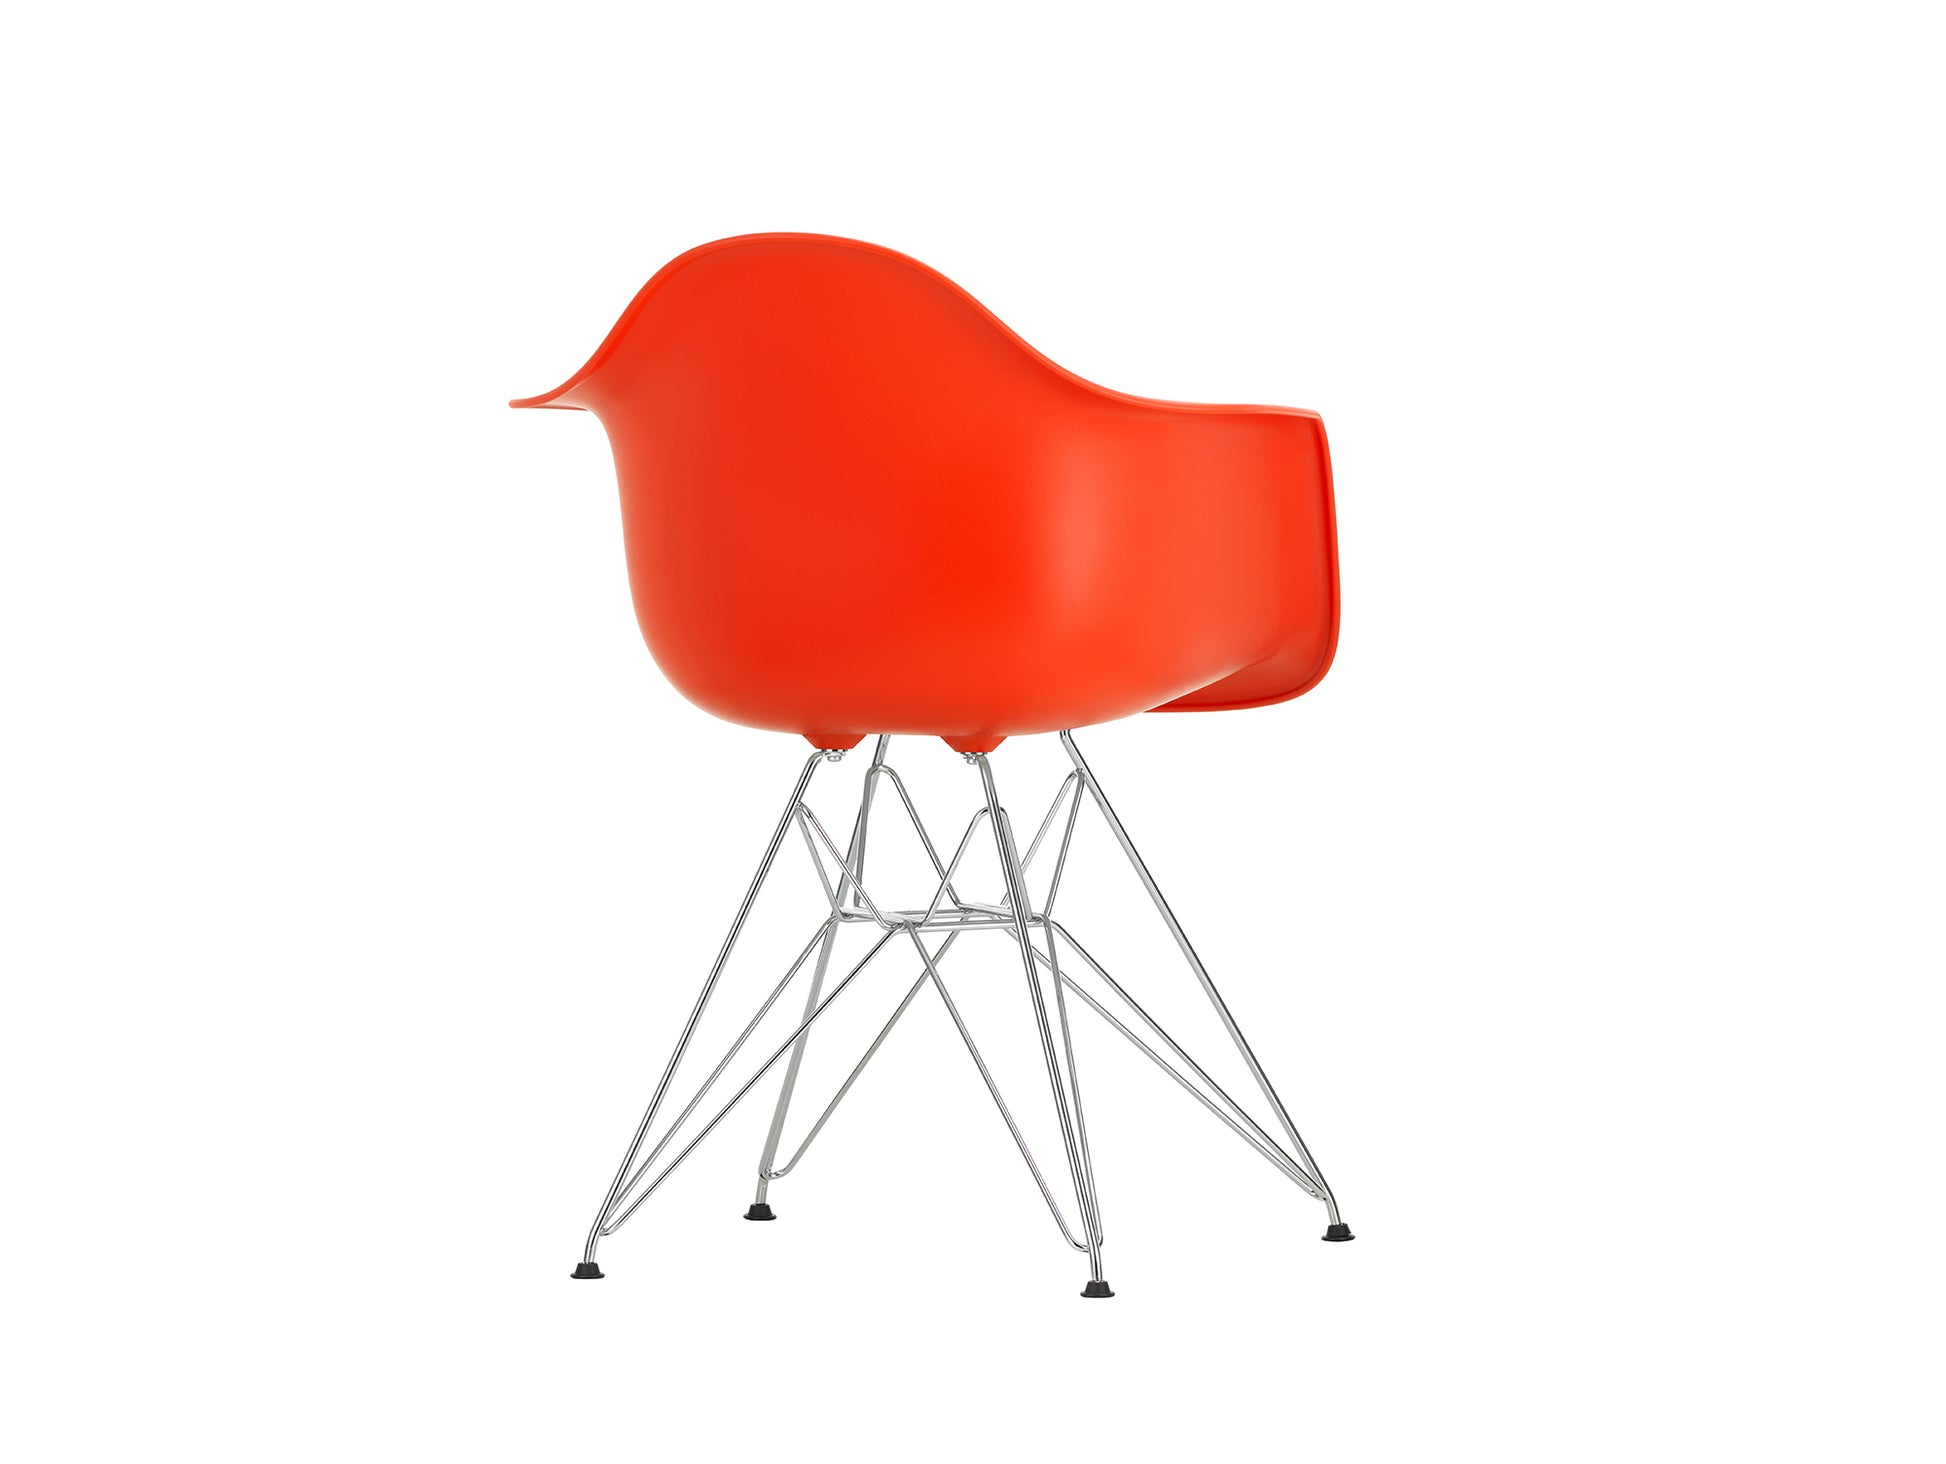 Eames DAR Plastic Armchair RE by Vitra - 03 Poppy Red Shell / Chrome Base